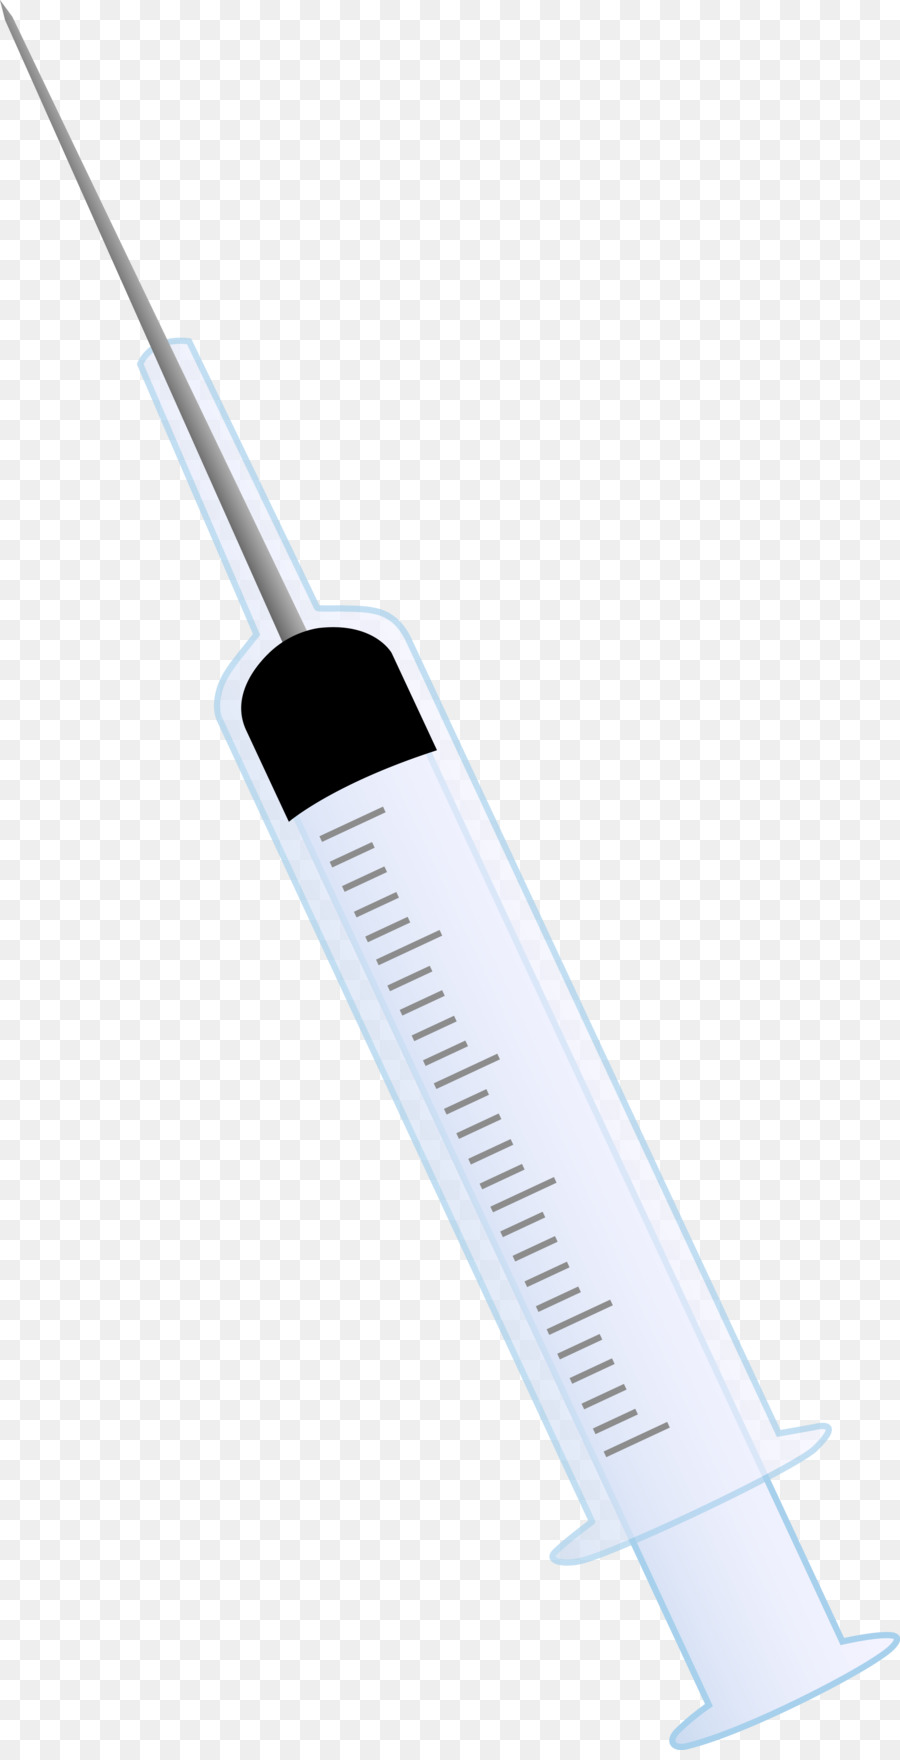 Syringe Cartoon clipart.